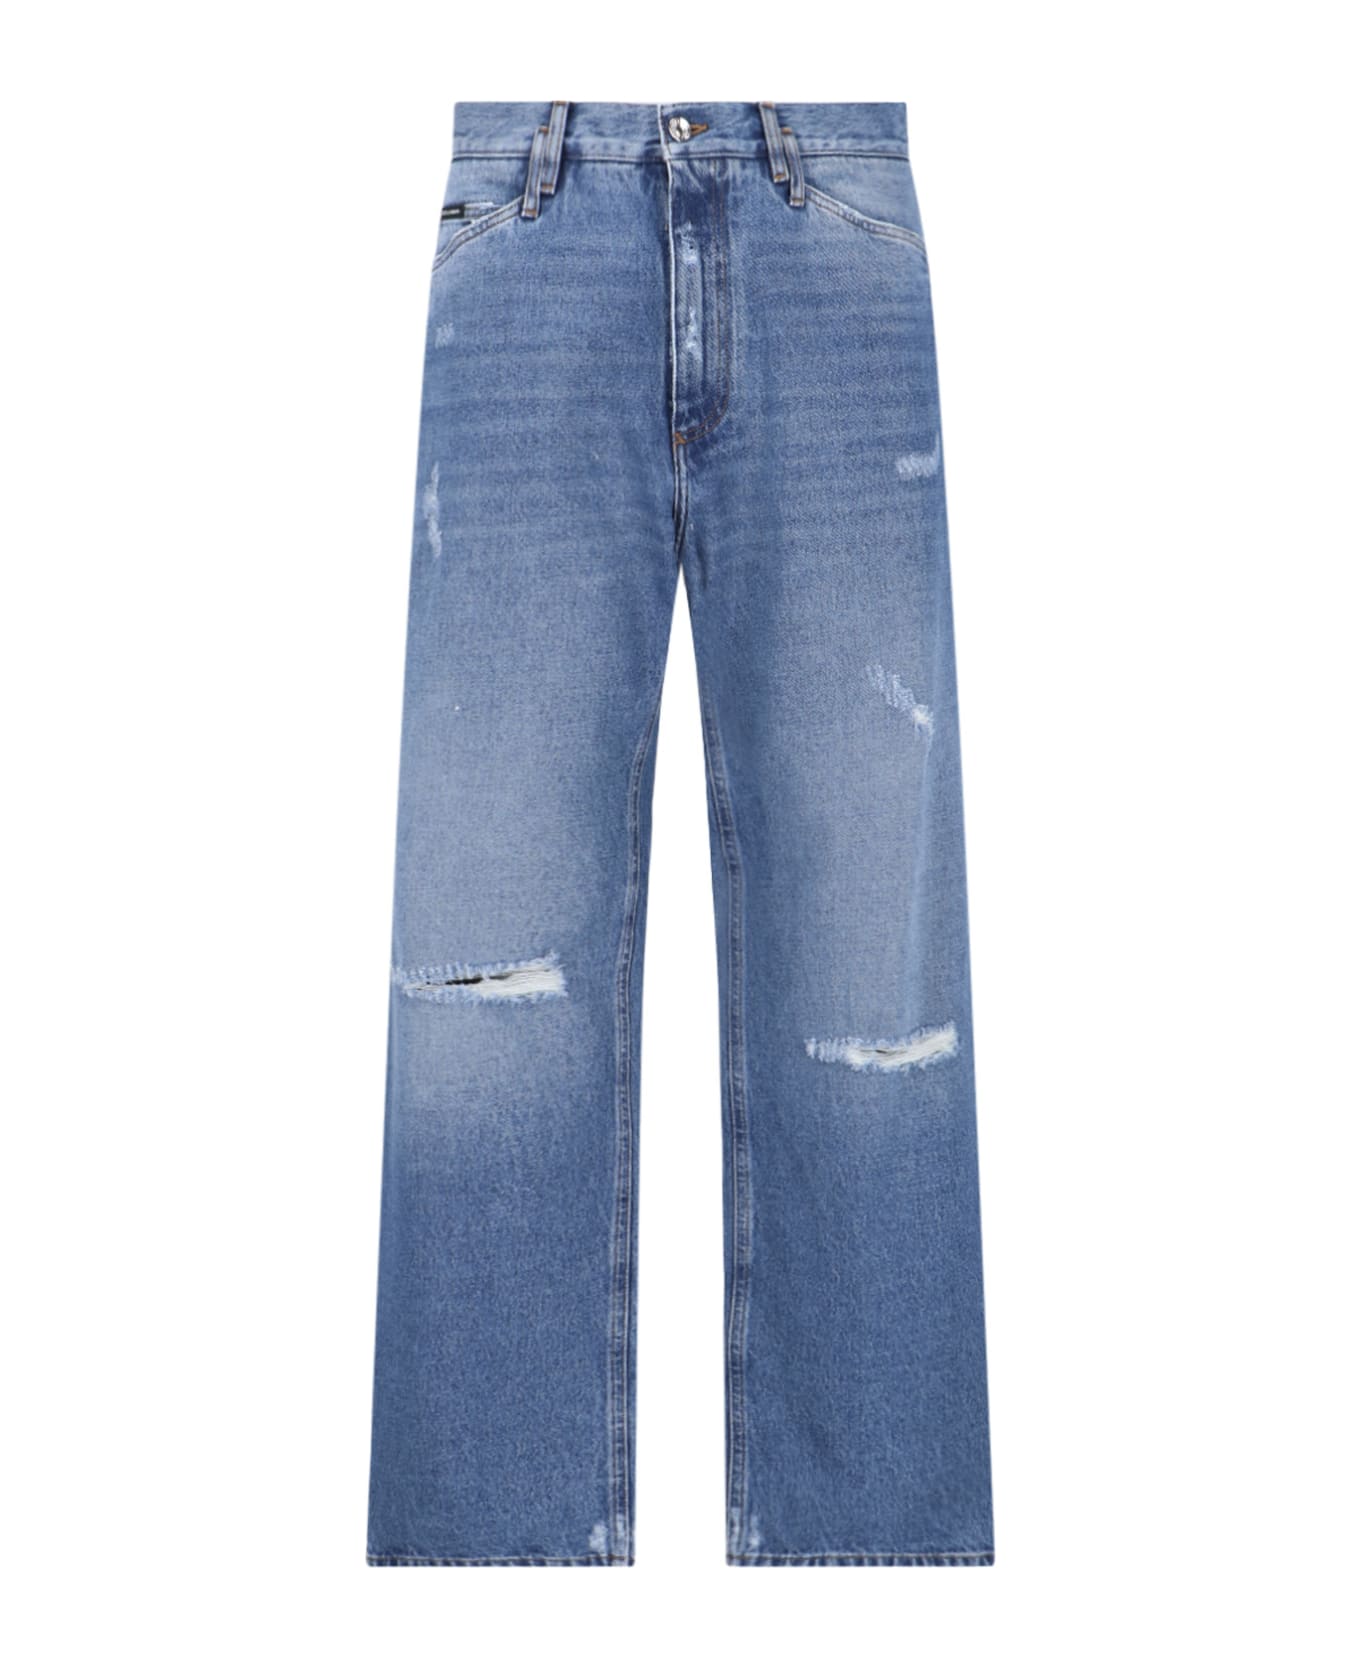 Dolce & Gabbana Jeans - Variante Abbinata